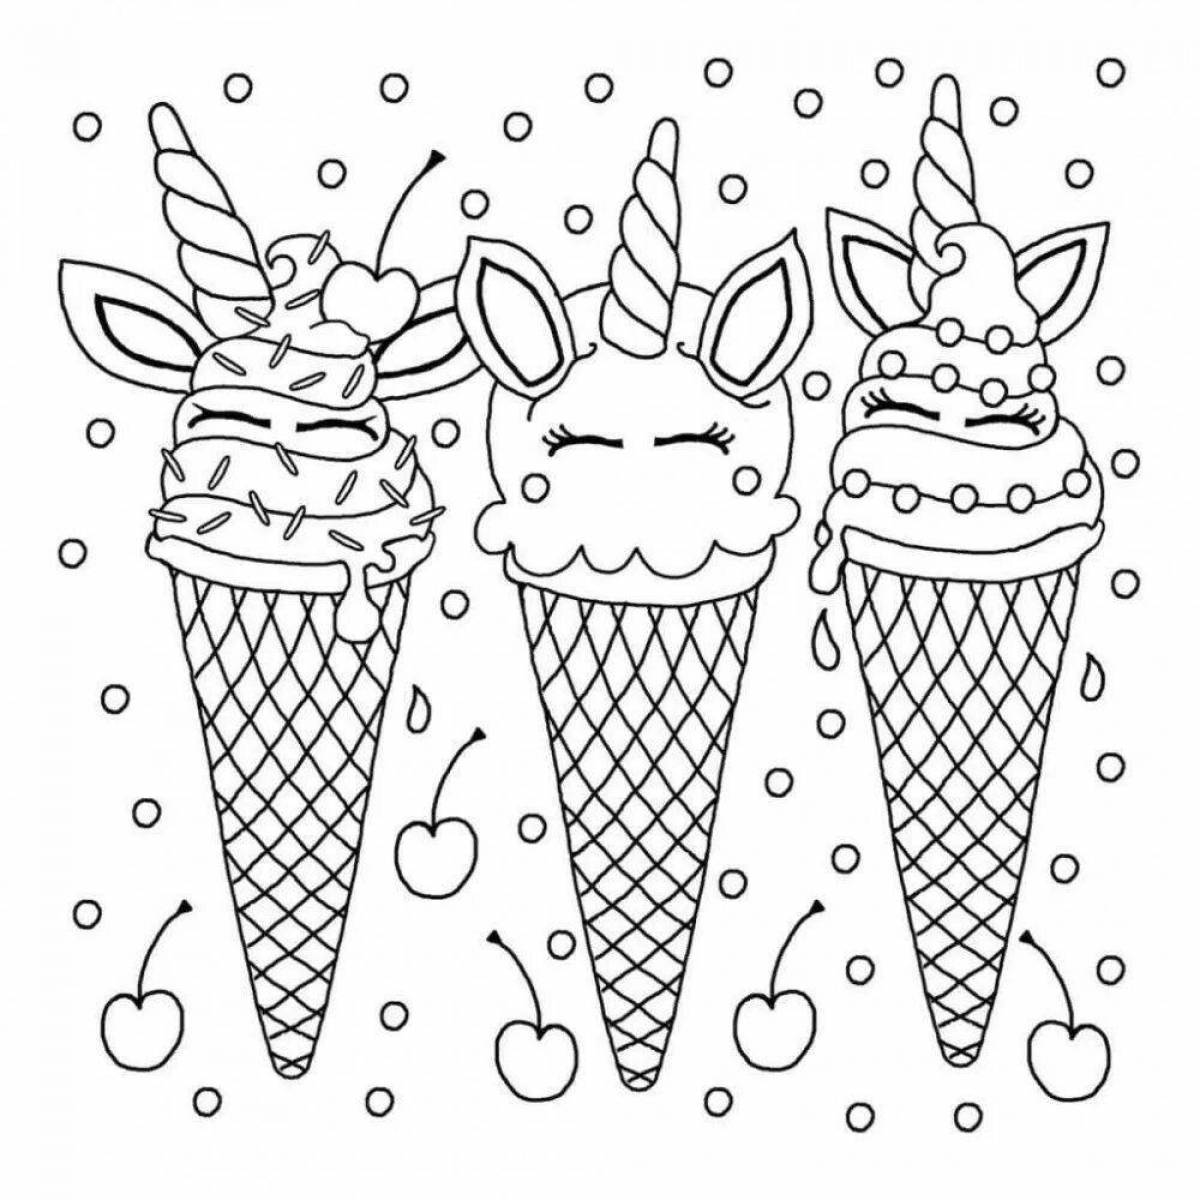 Crazy unicorn ice cream coloring book